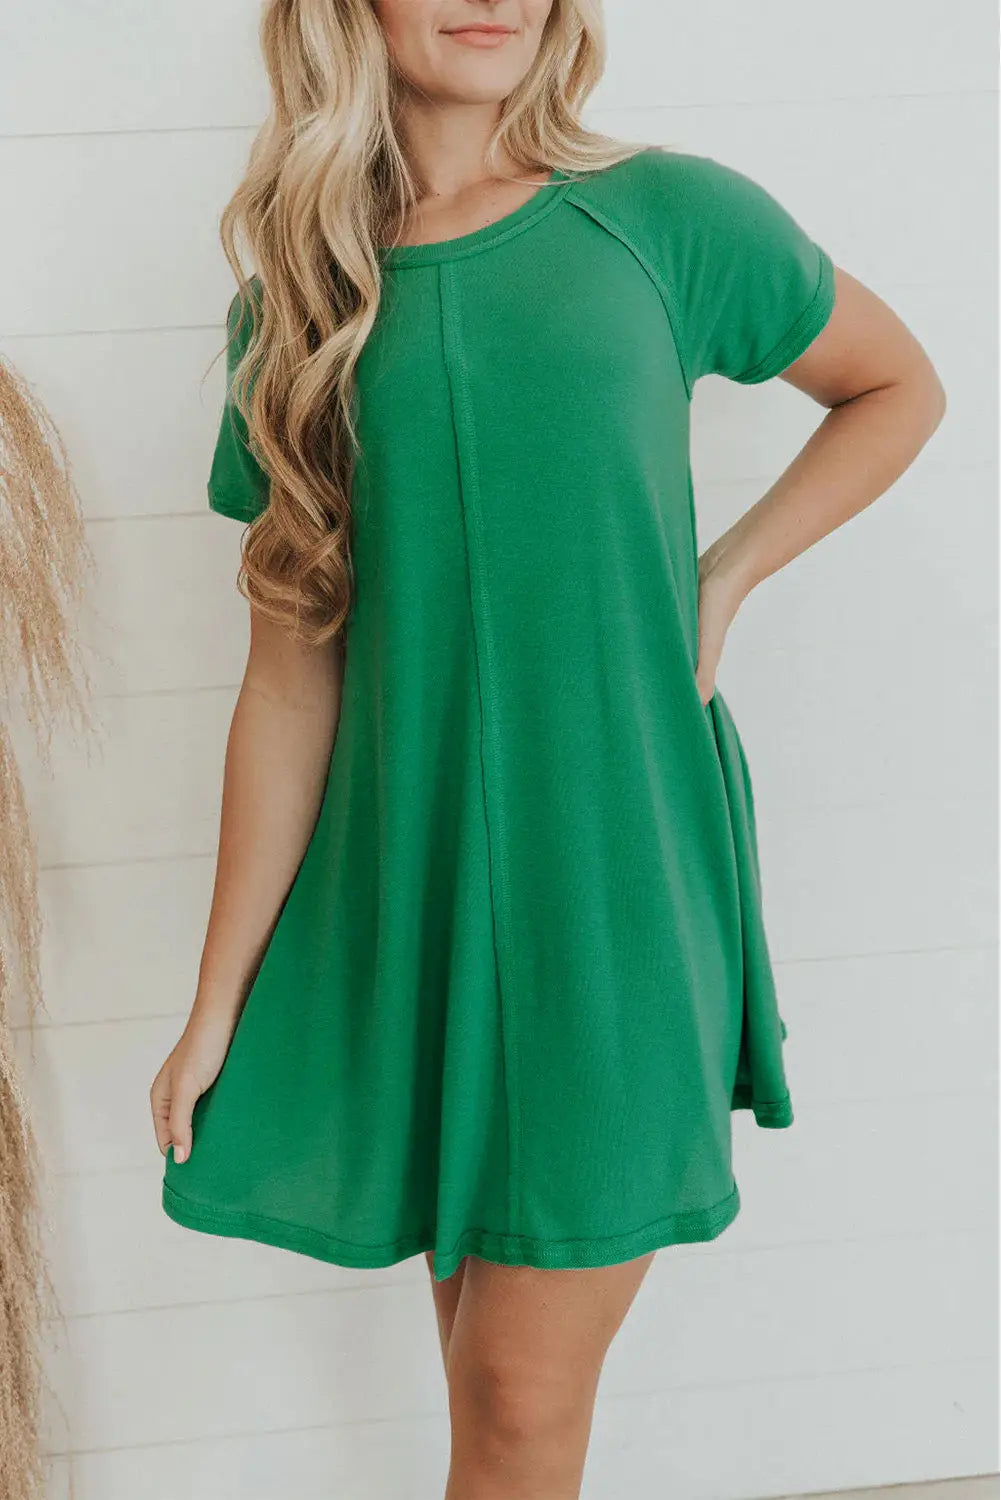 Bright green exposed seam t-shirt dress - s / 85% polyester + 10% cotton + 5% elastane - t shirt dresses